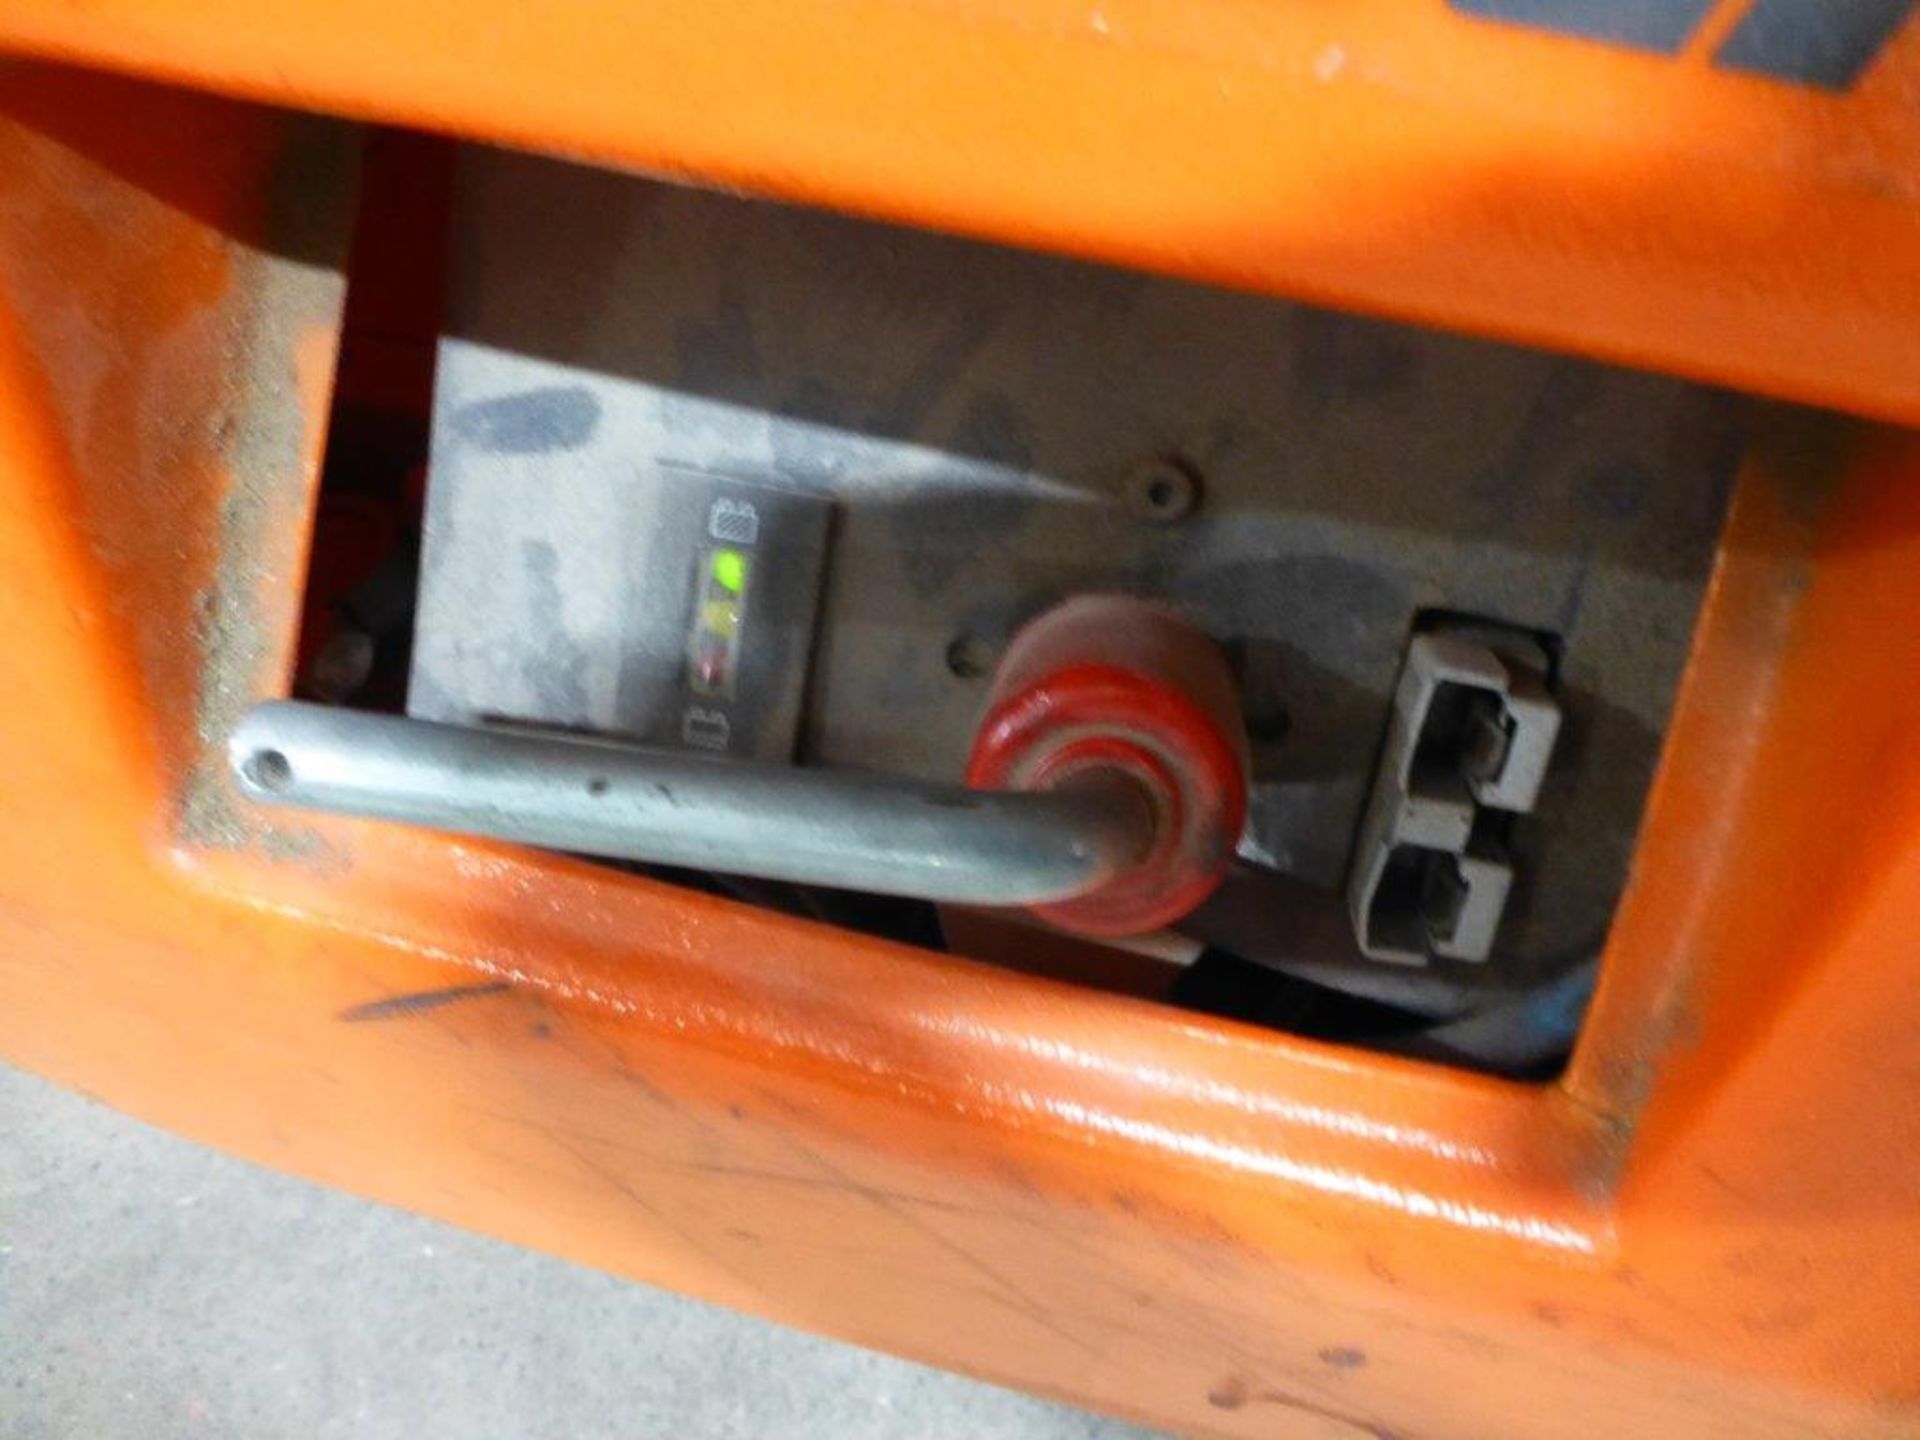 Kentruck electric lift pallet truck - Image 3 of 3